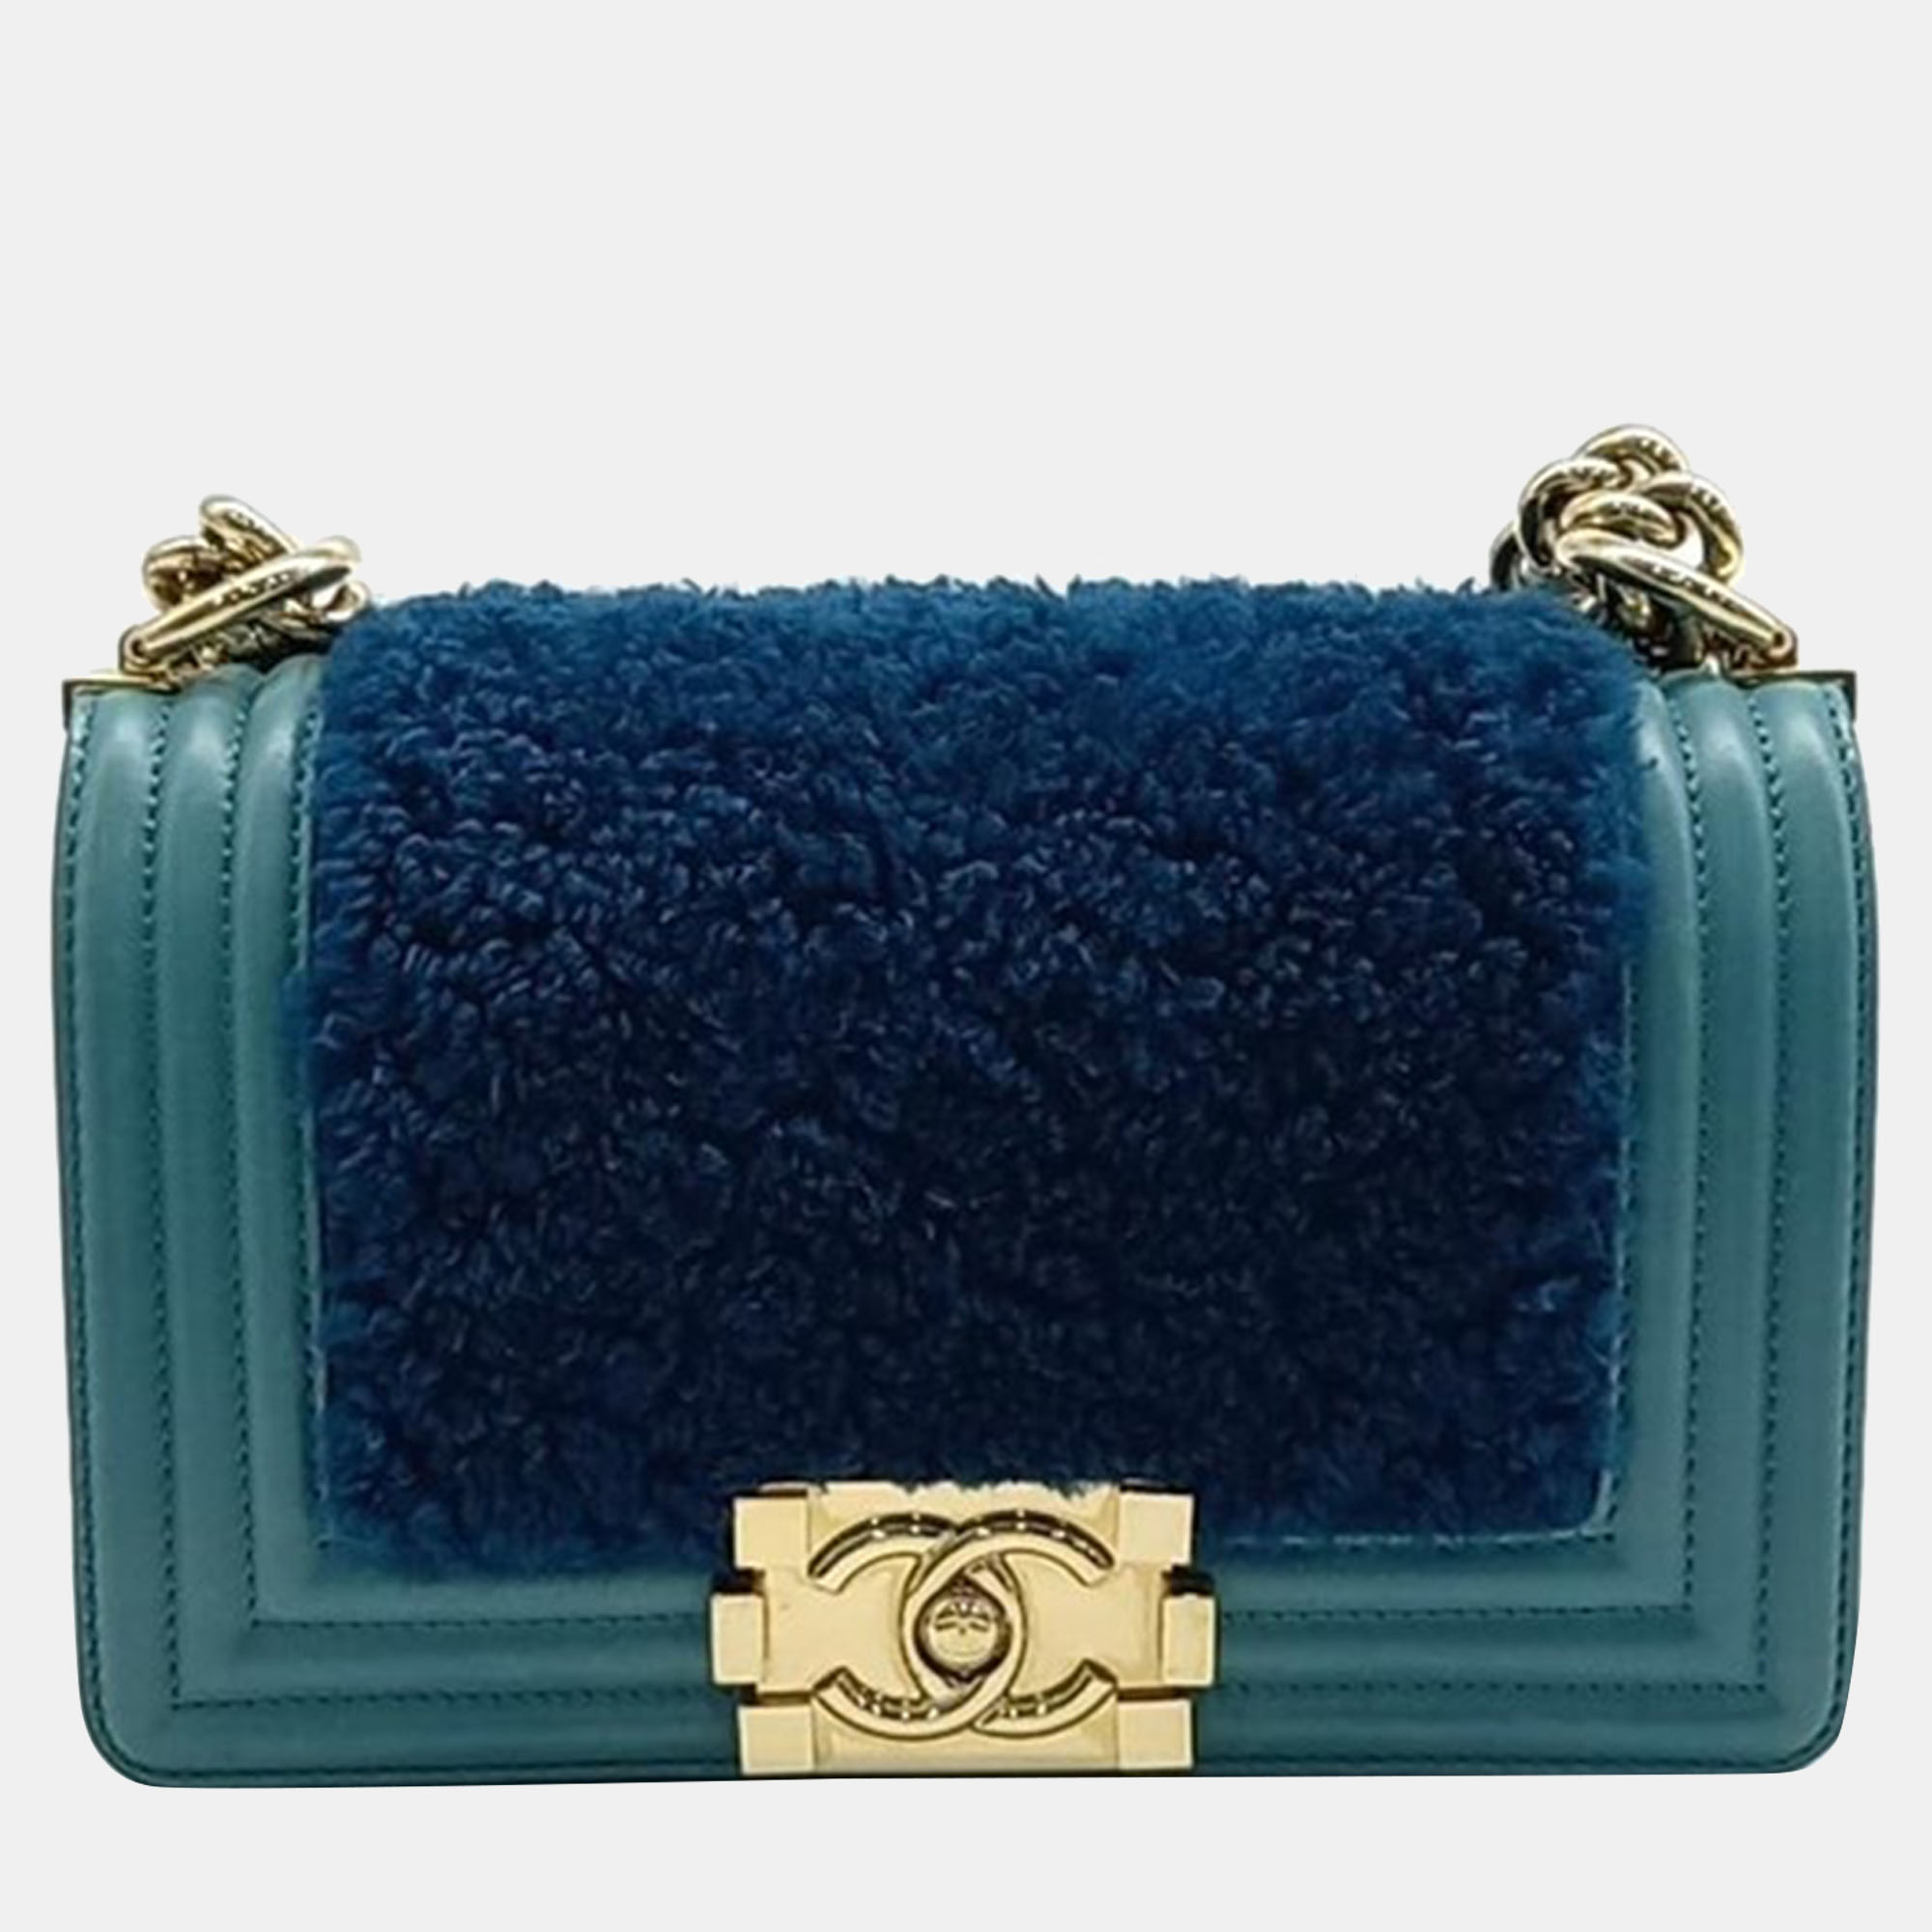 Chanel turquoise tone boy bag mini shoulder bag